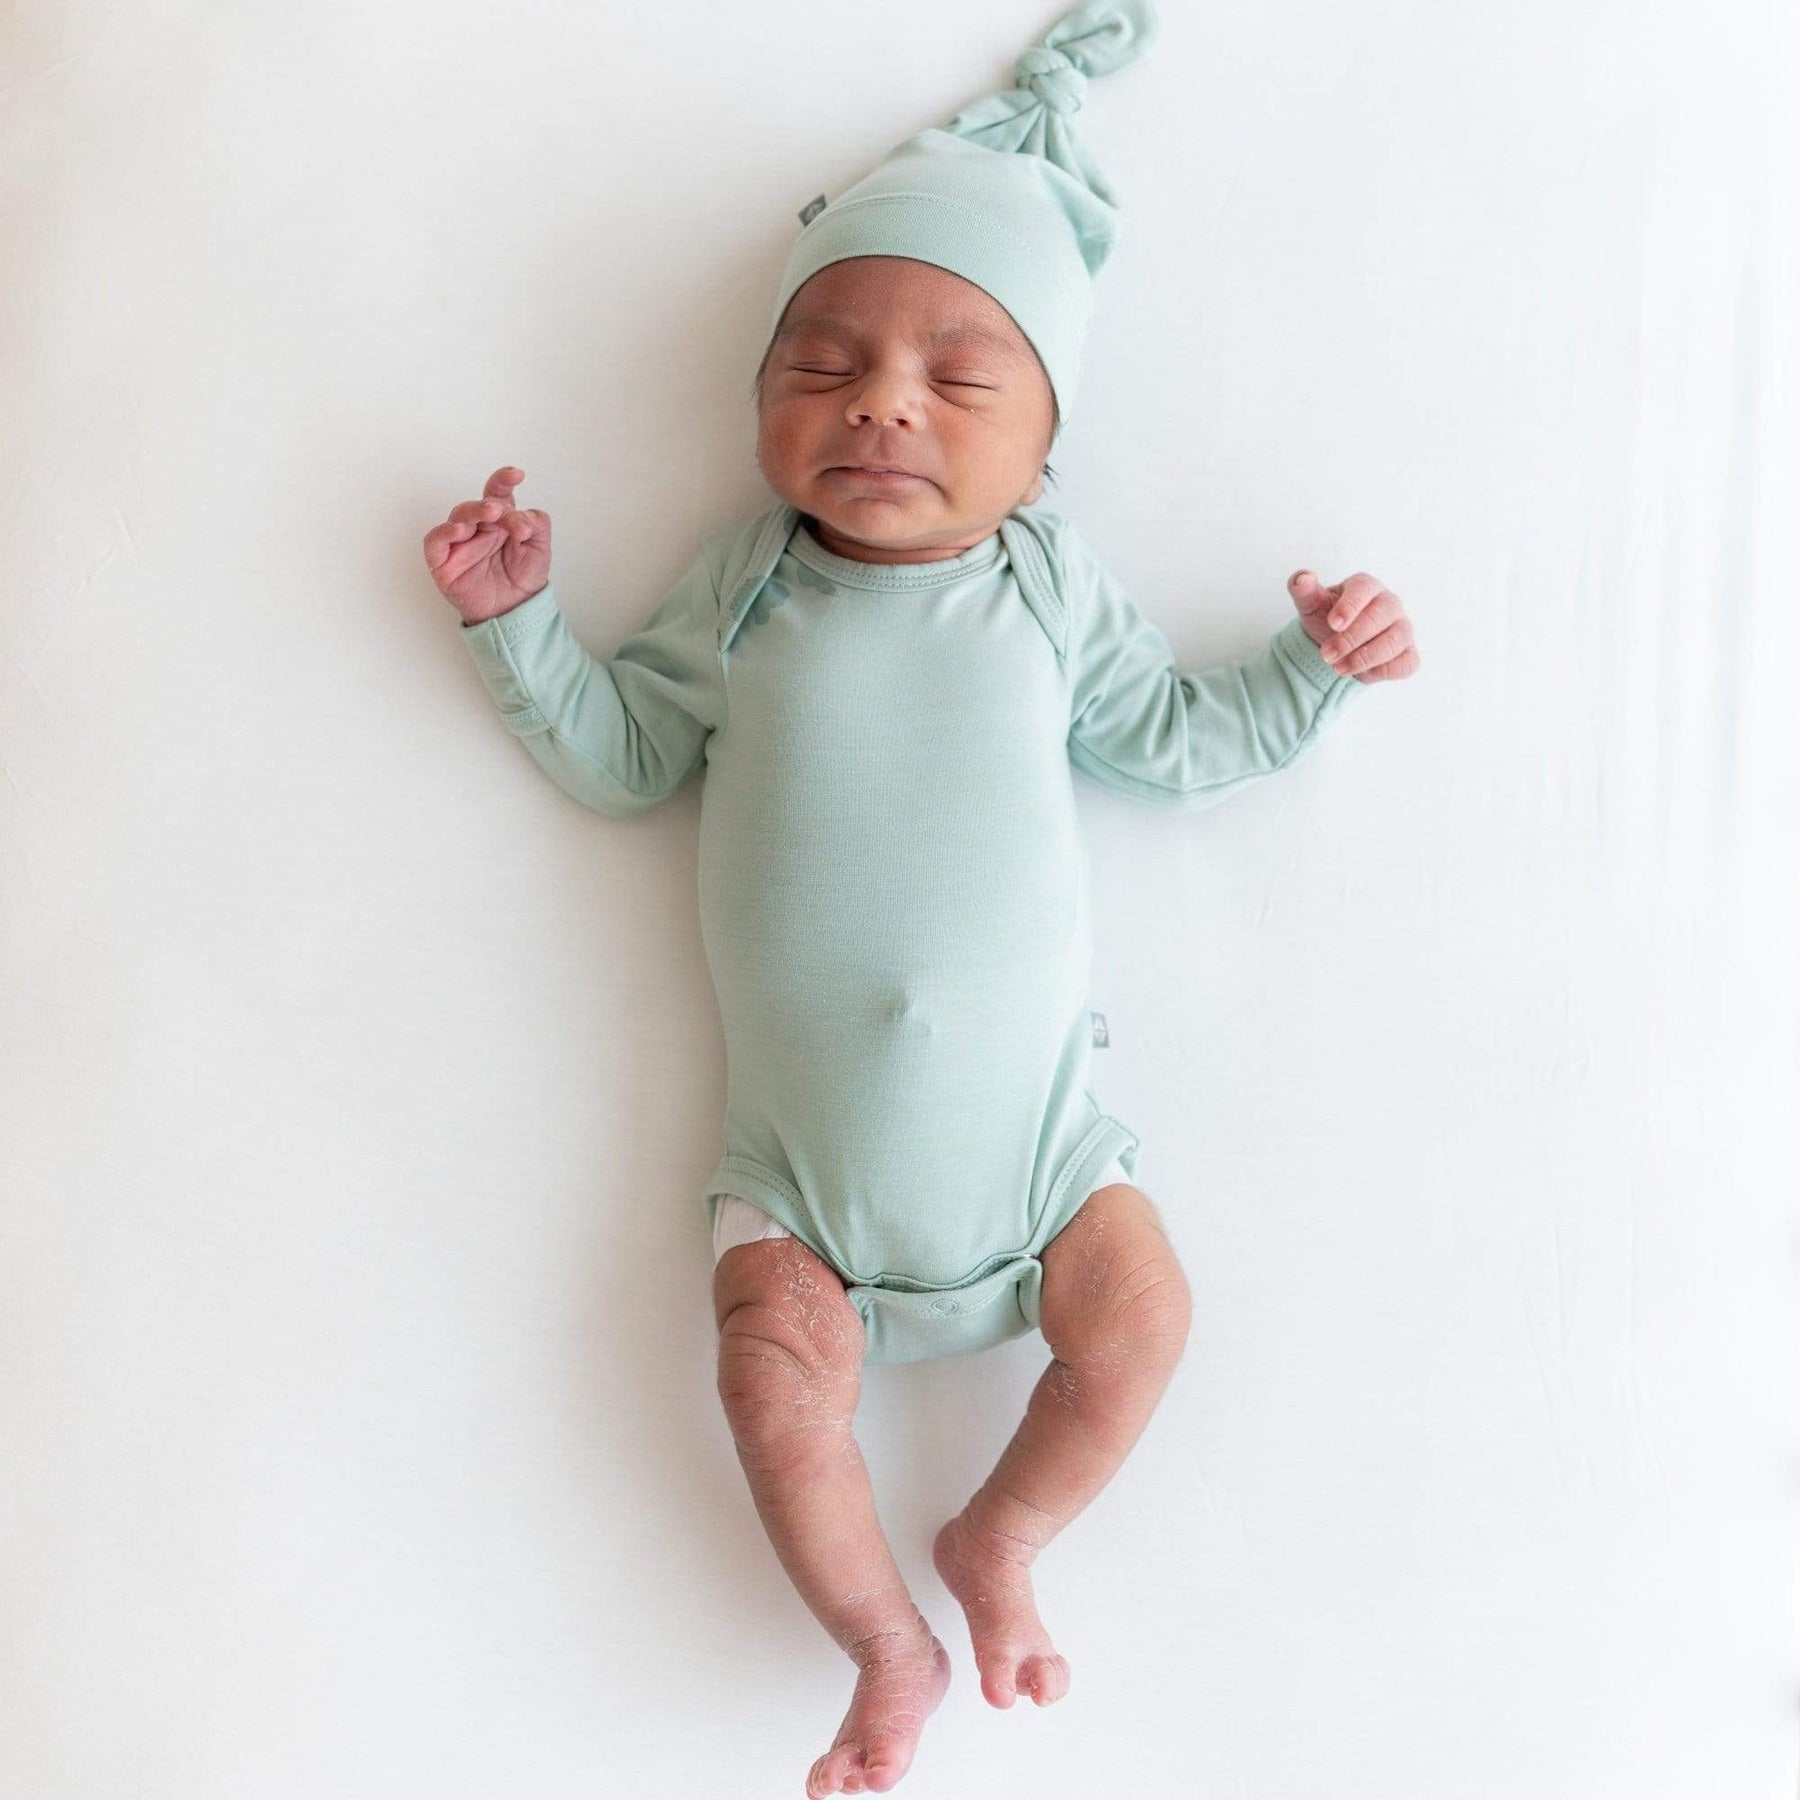 Newborn wearing Kyte Baby Long Sleeve Bodysuit in Sage